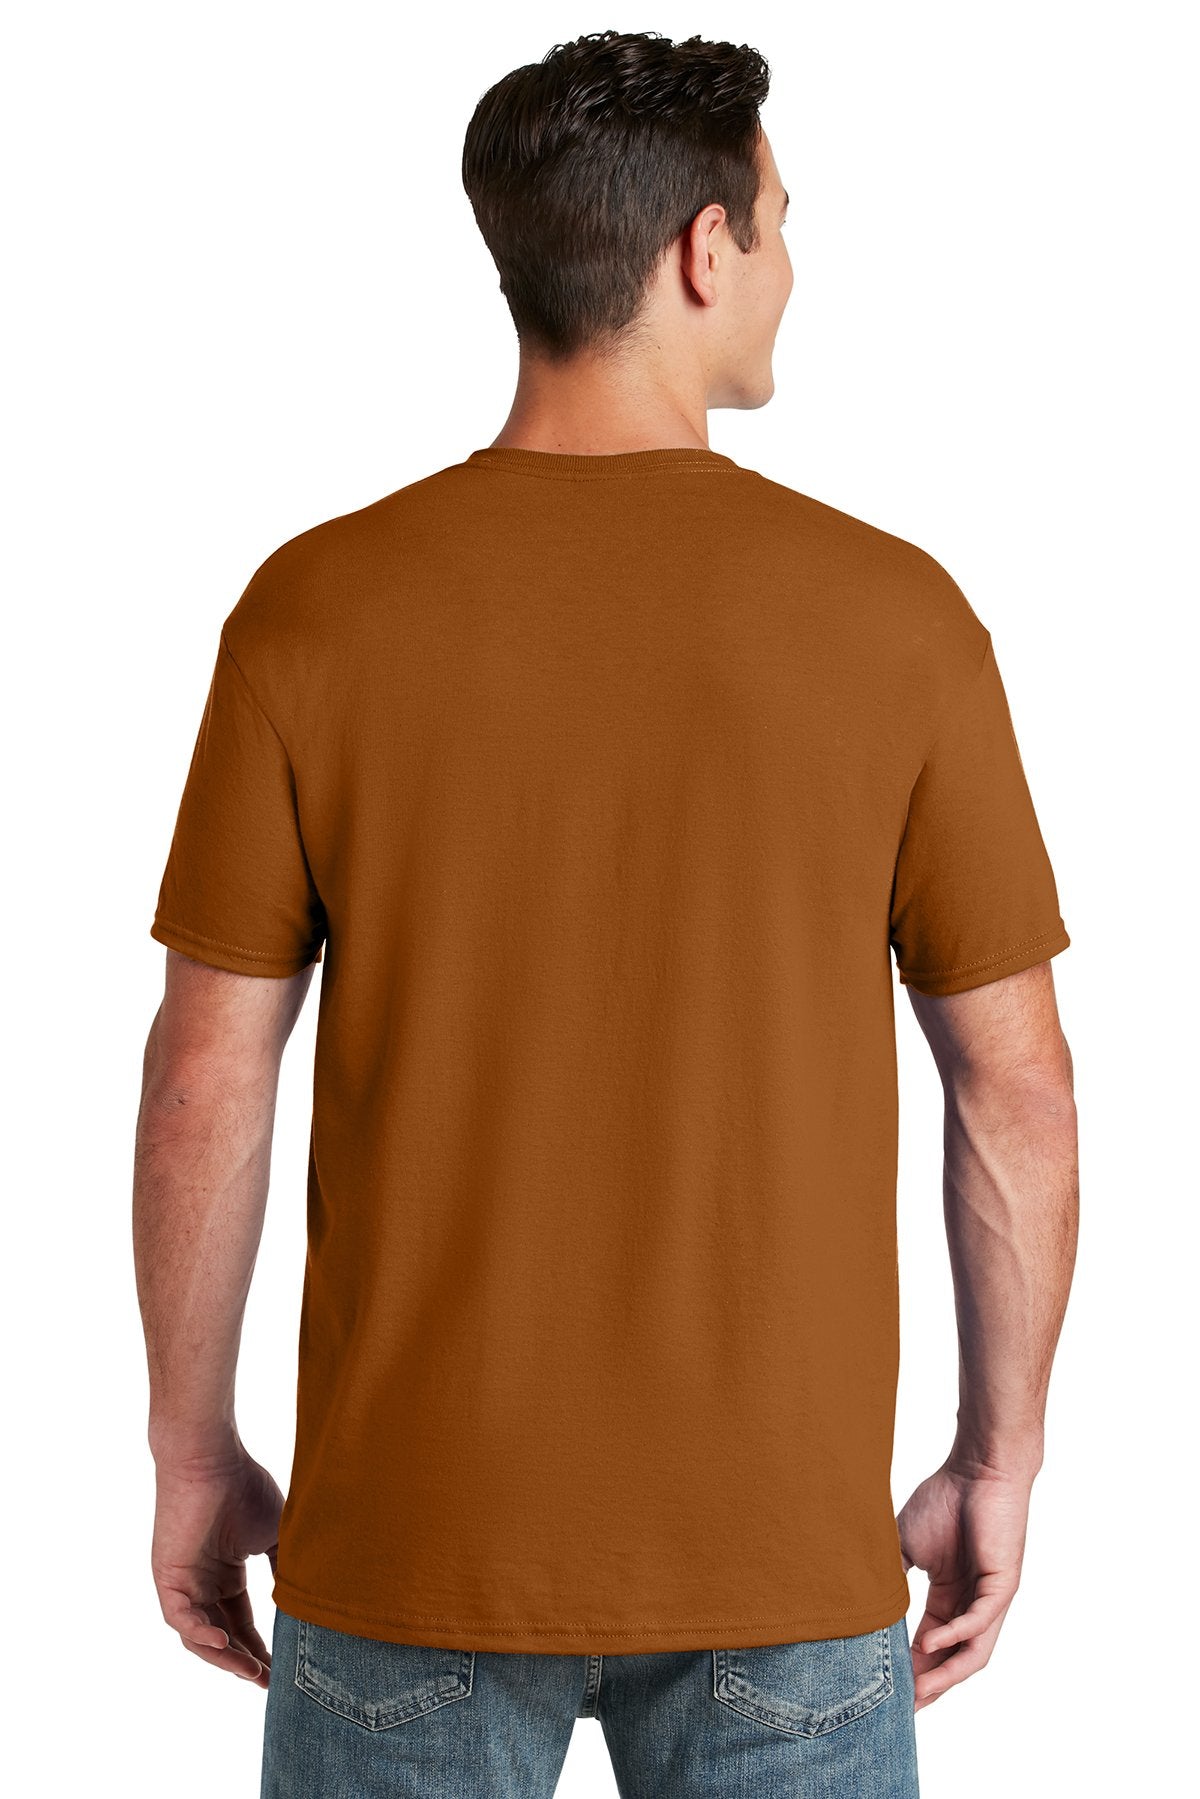 Jerzees Dri-Power Active 50/50 Cotton/Poly T-Shirt 29M Texas Orange